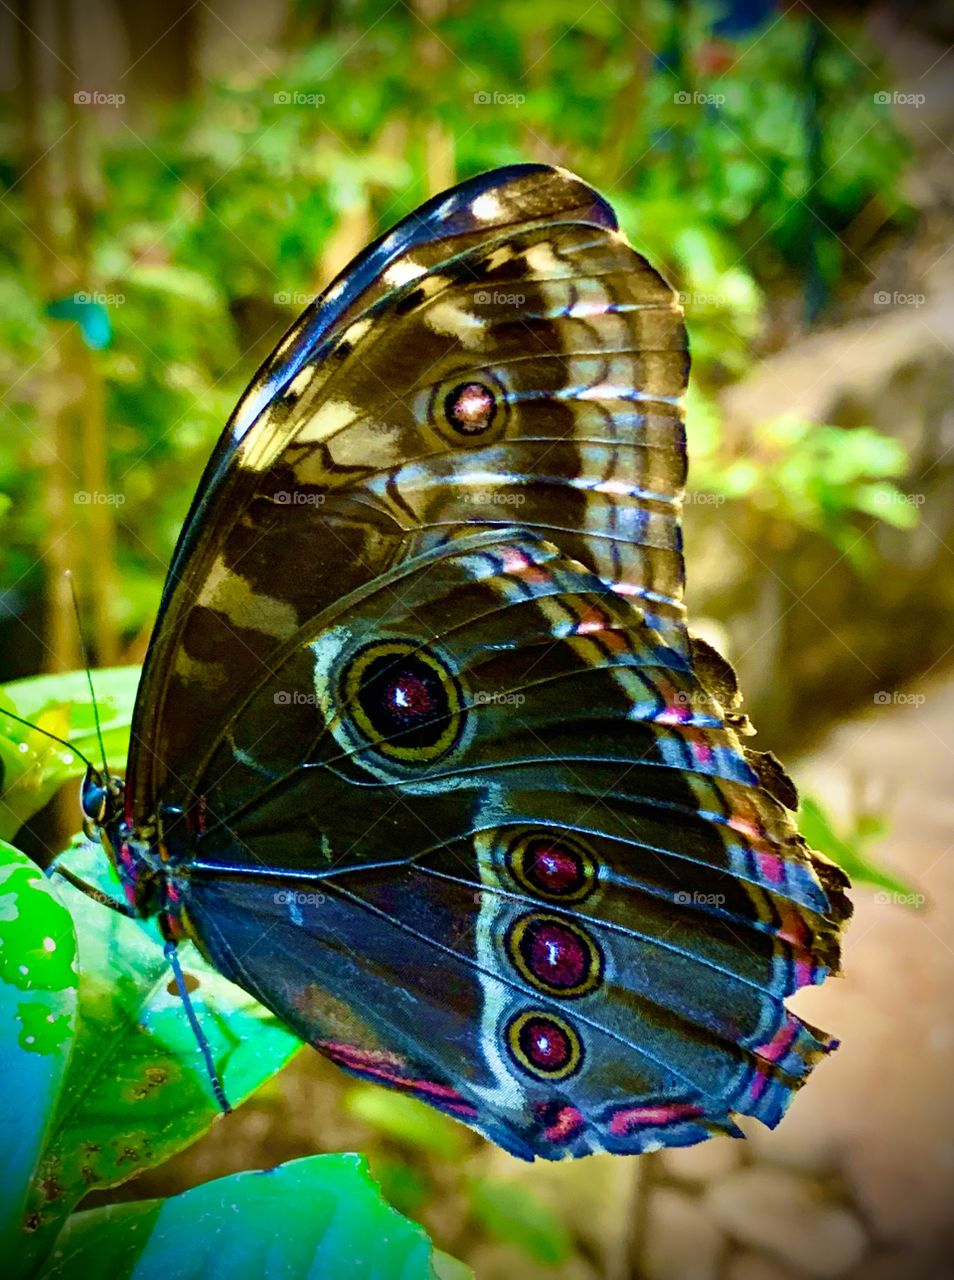 butterfly with beautiful eye wings